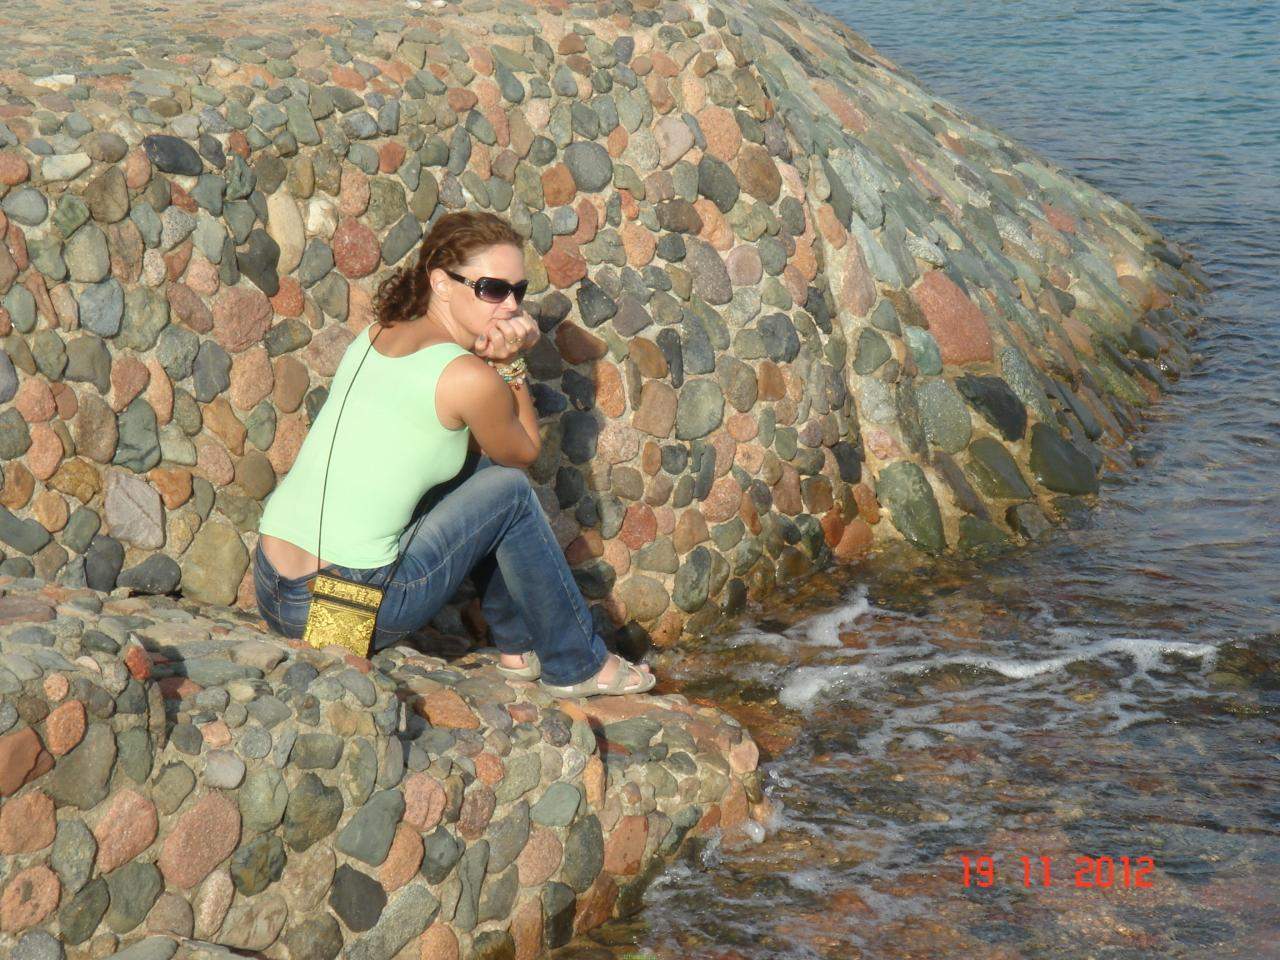 Раздетая сучка загорает на камнях перед океаном (37 фото)